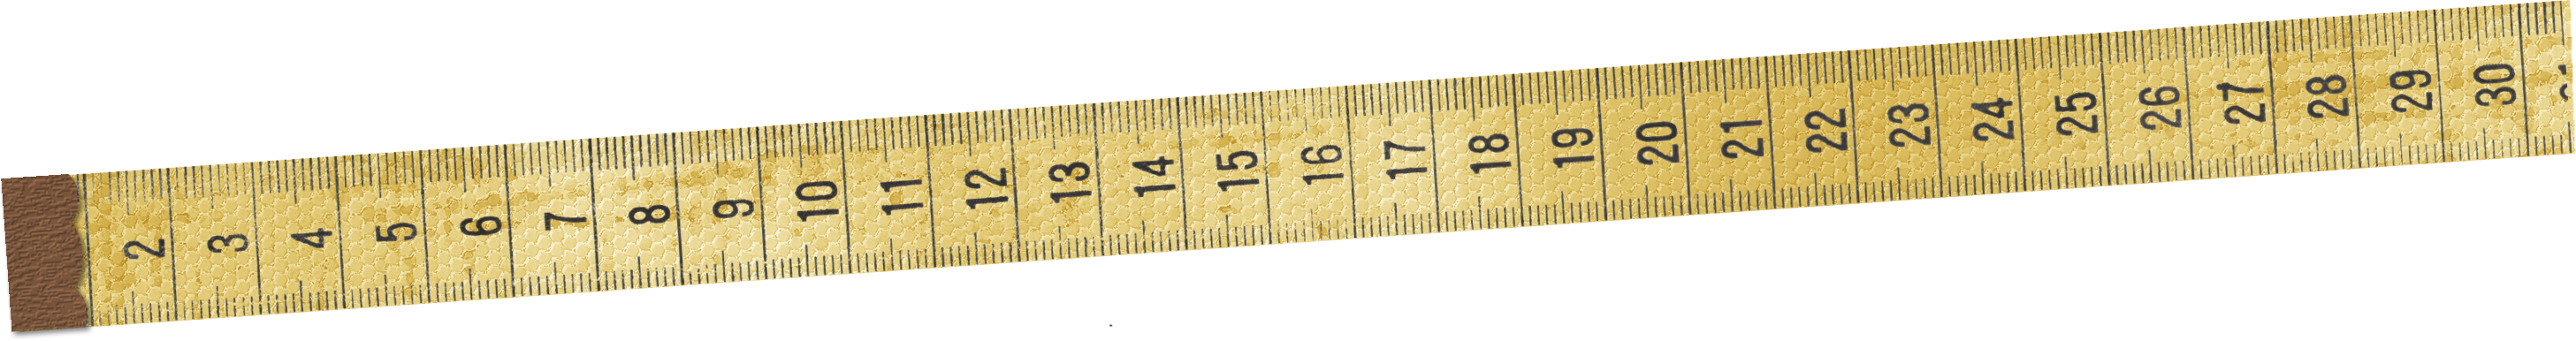 Tape Measure Transparent PNG